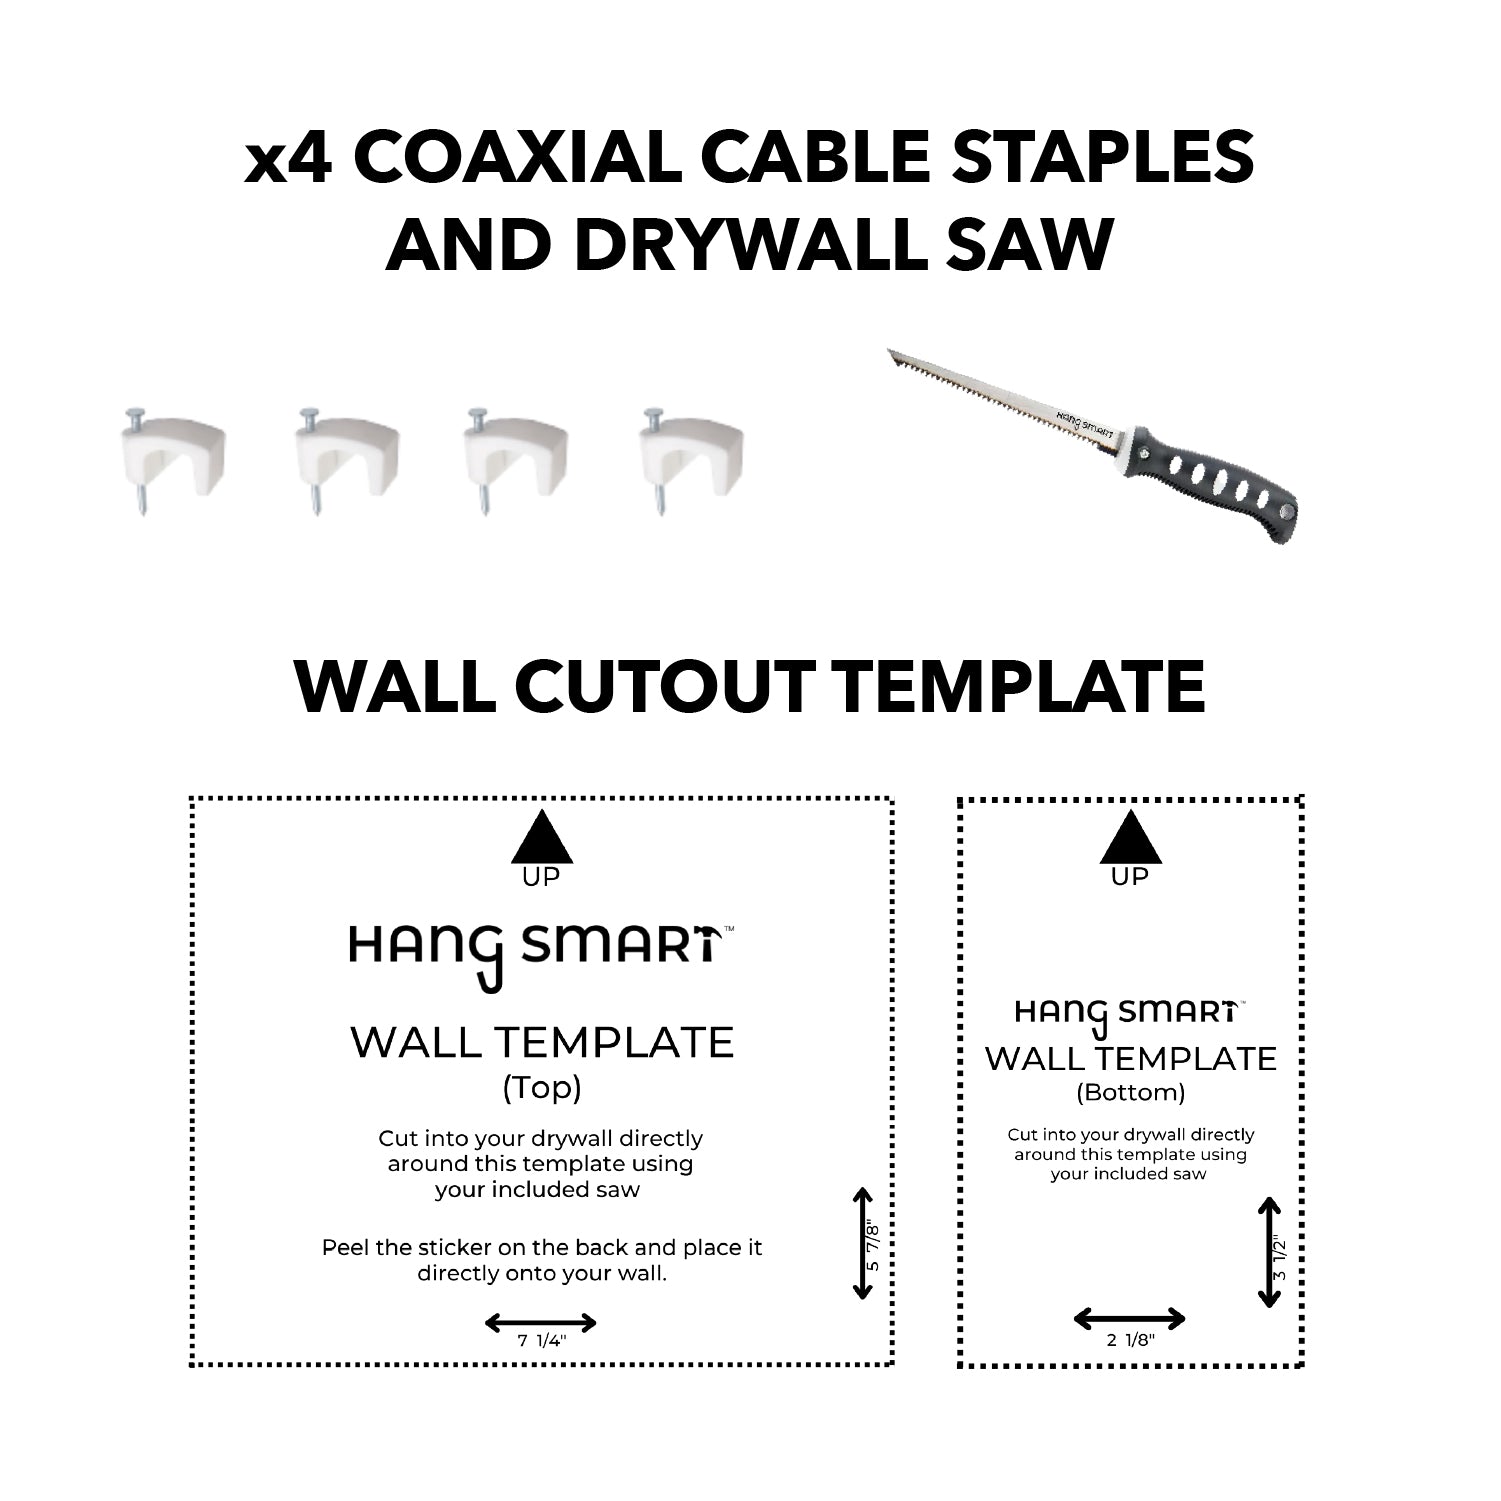 HangSmart diy wire concealer & cord hider for wire management